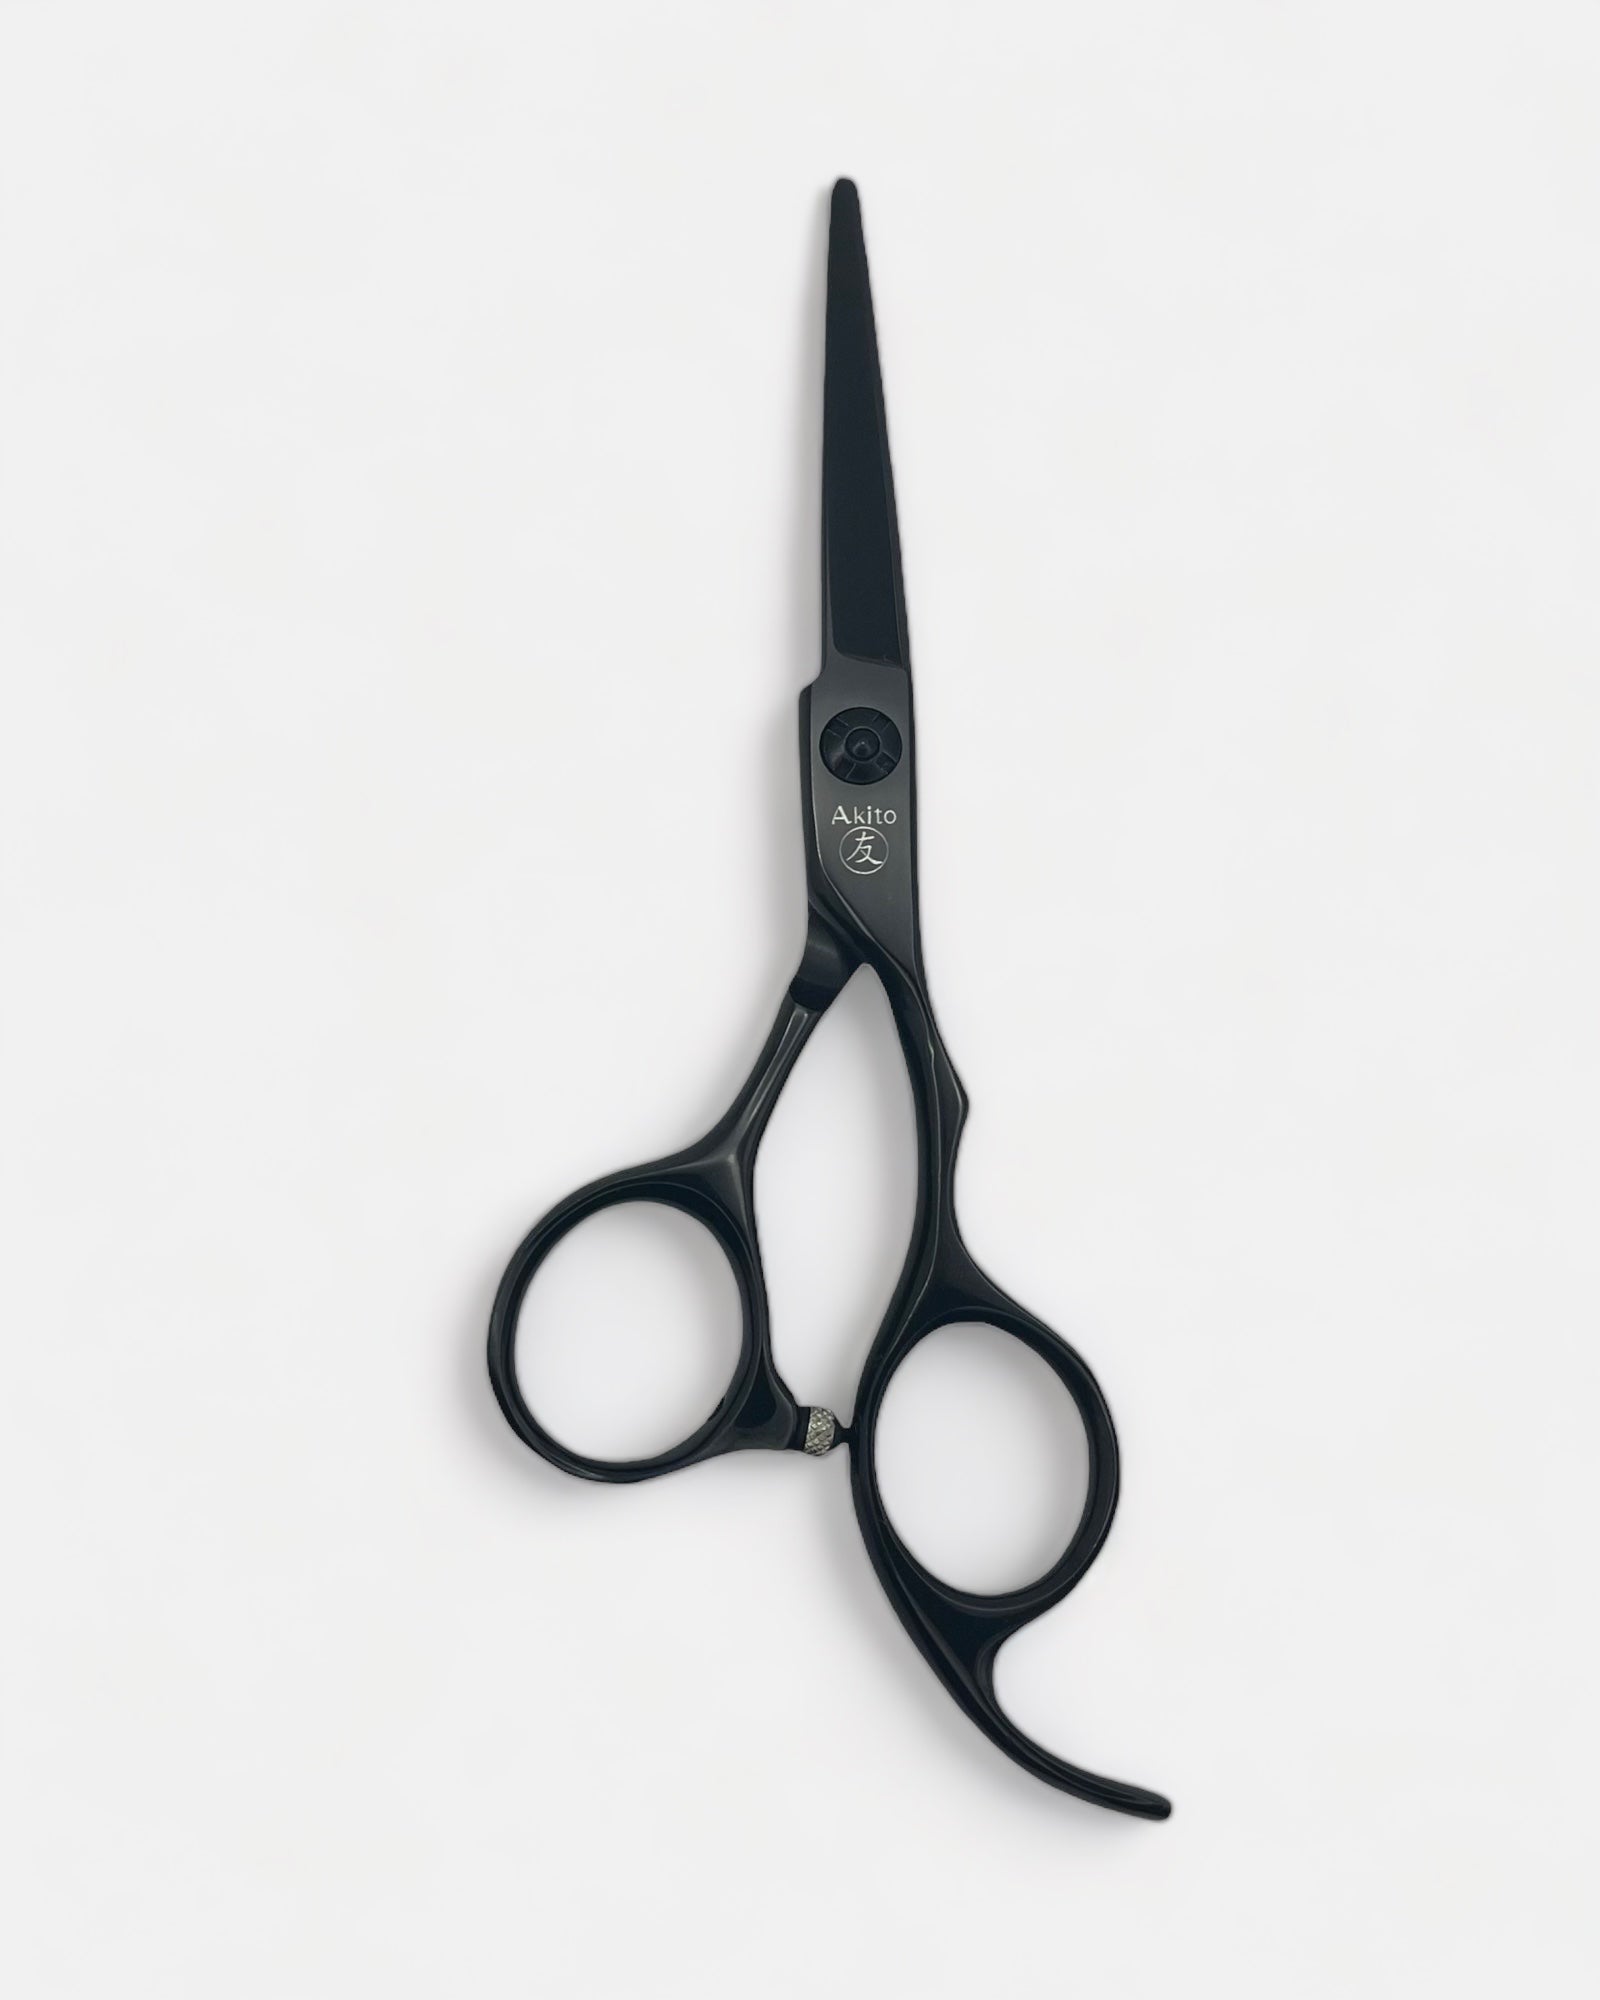 F-2 Hairdressing Scissors in black in 5.0"